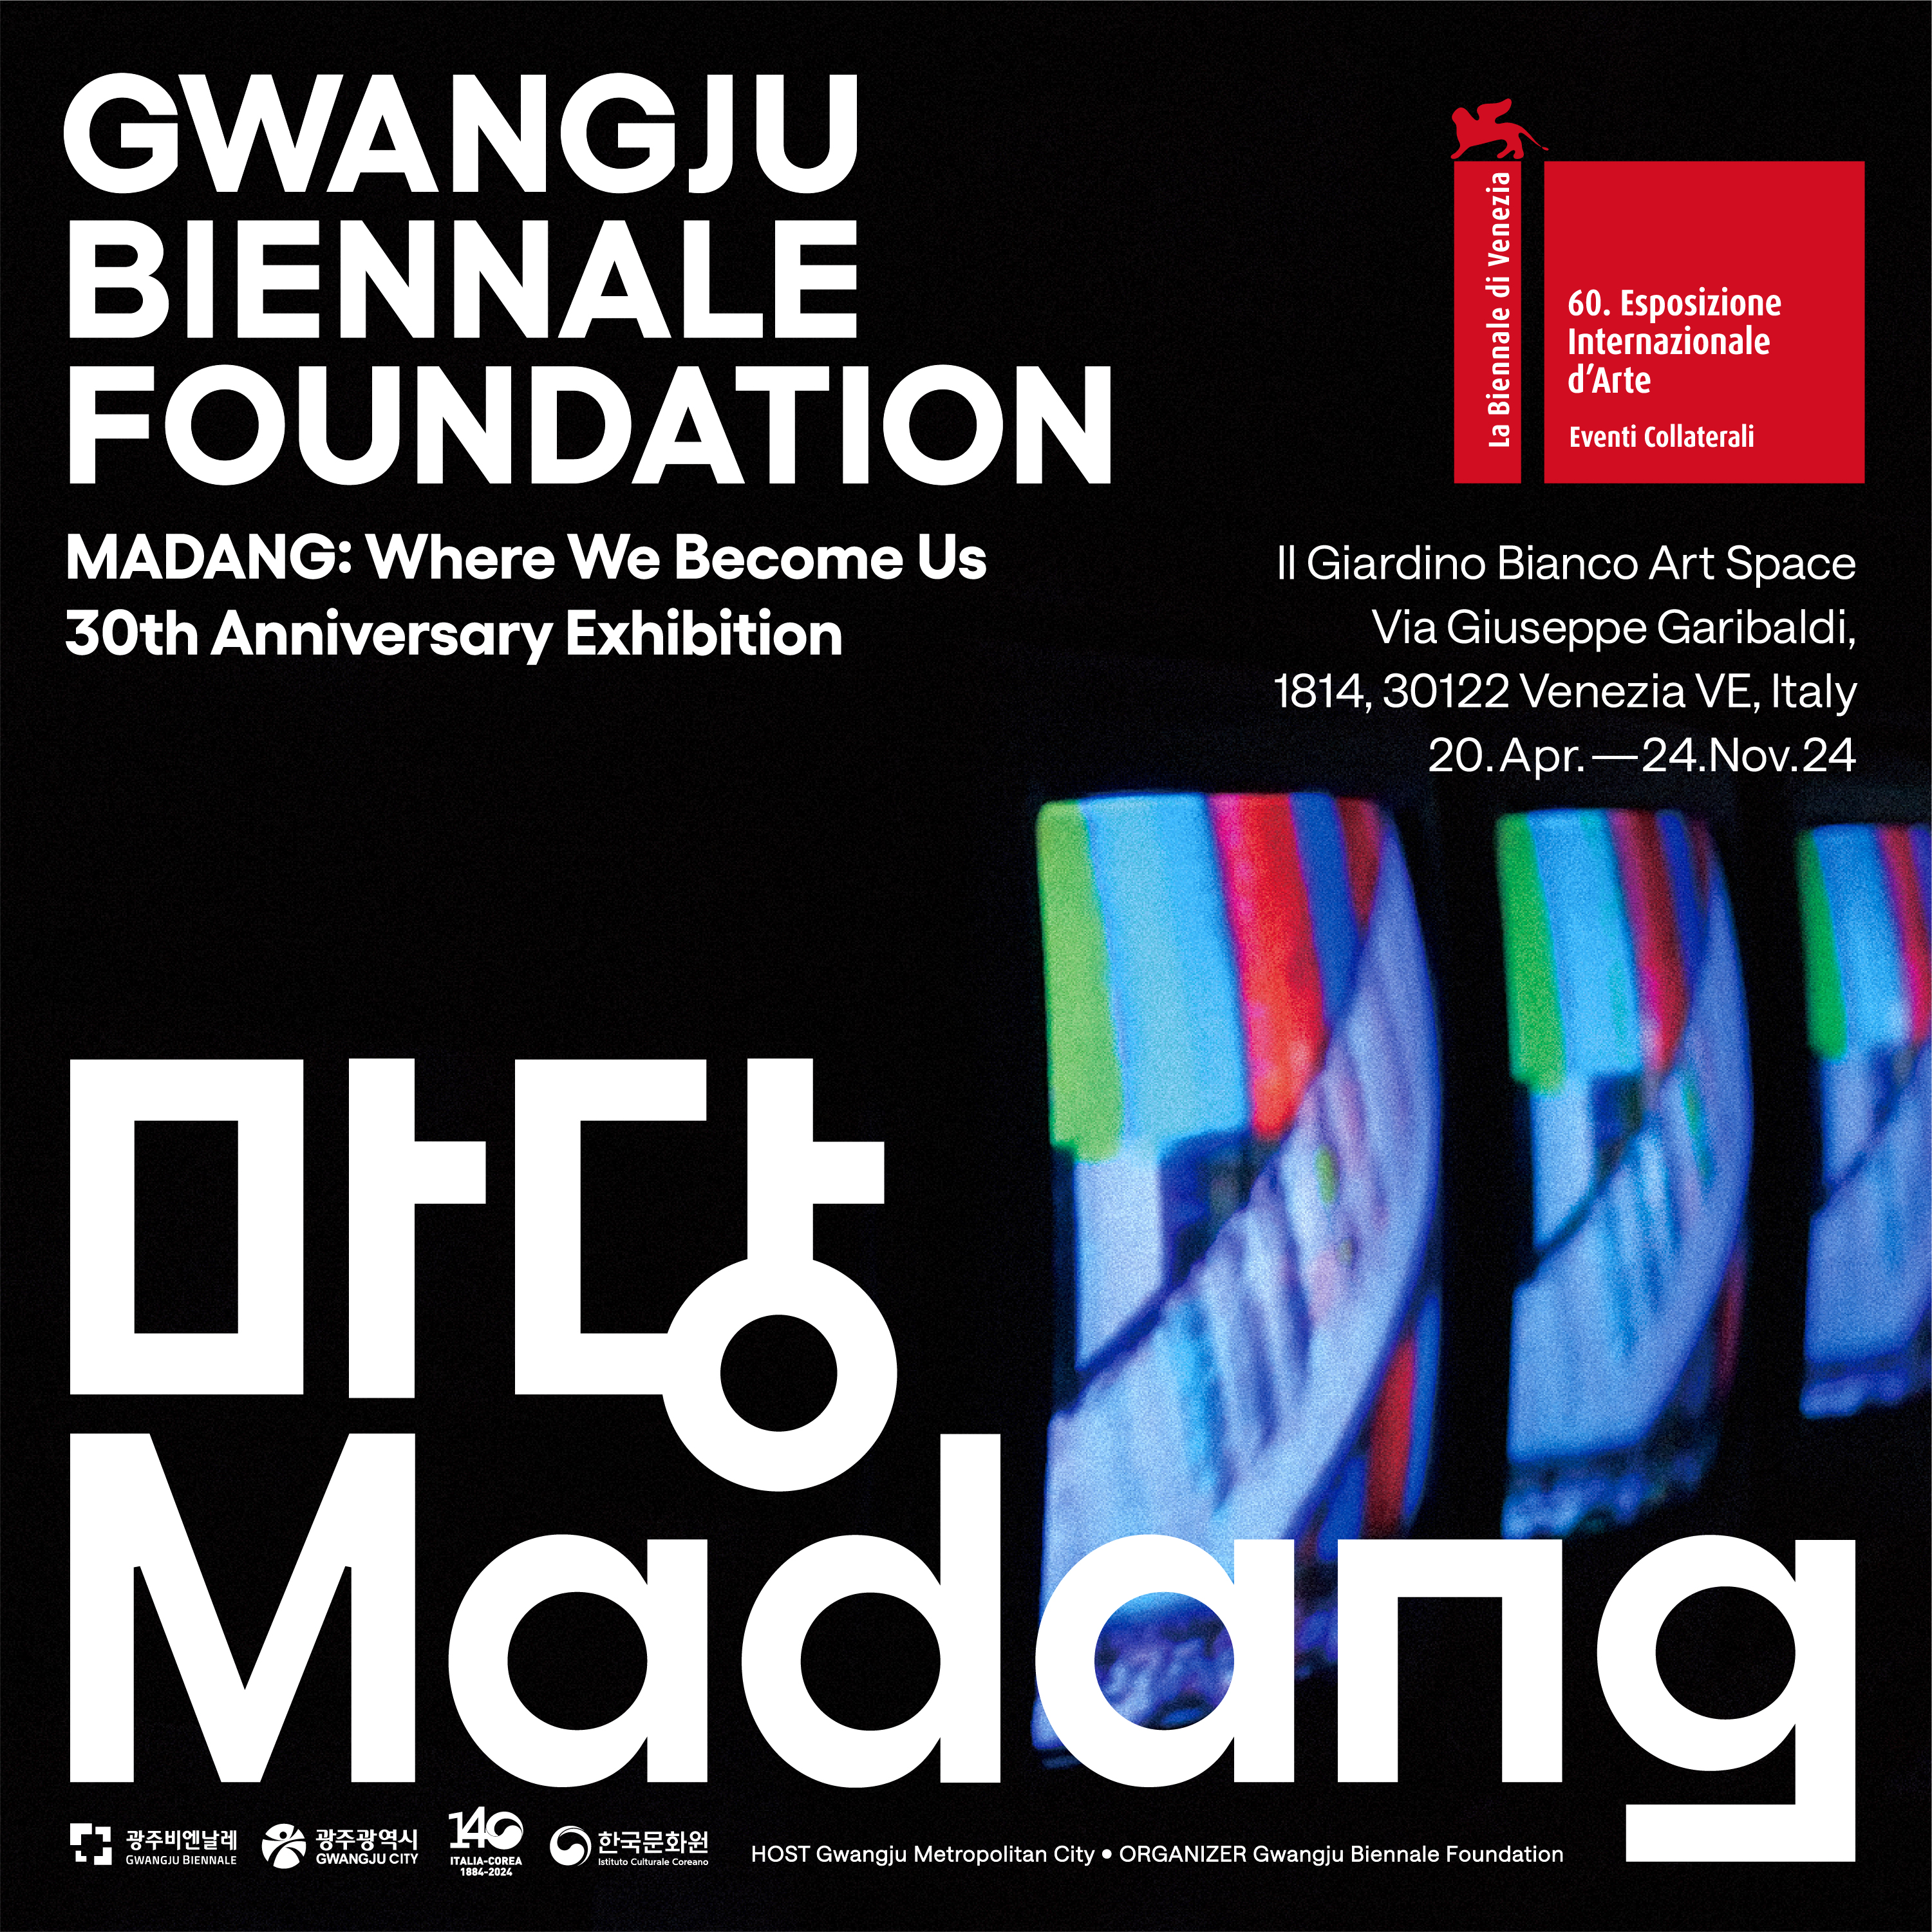 Gwangju Biennale 30th Anniversary Archive Exhibitio